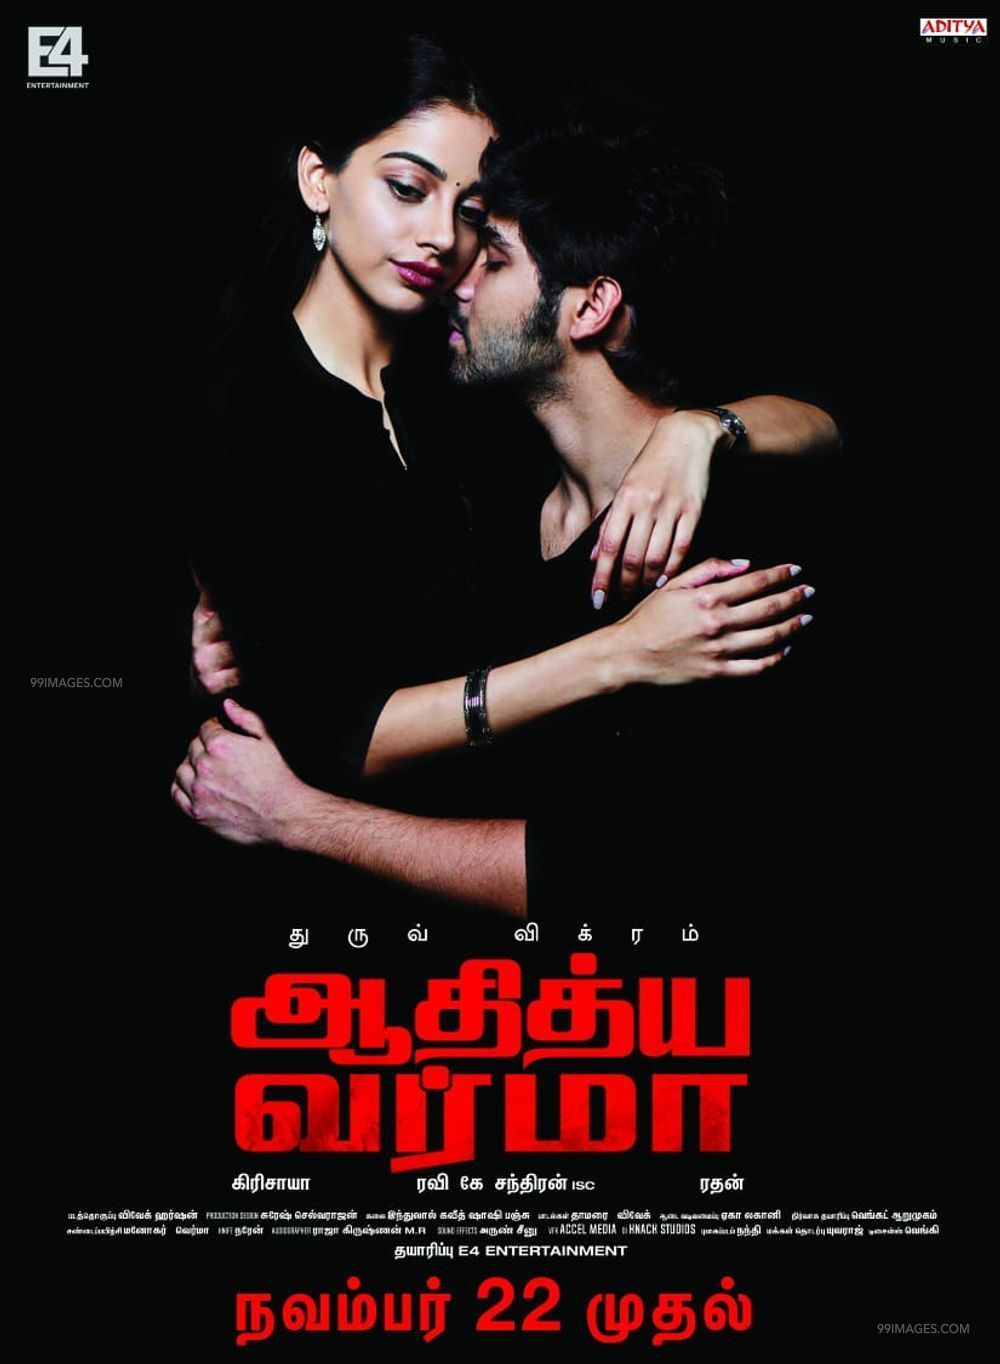 Adithya Varma Movie Latest HD Photo, Posters & Wallpaper Download (1080p, 4K) #adithyavarma #kollywood. HD photo, Best love pics, Romantic drama film